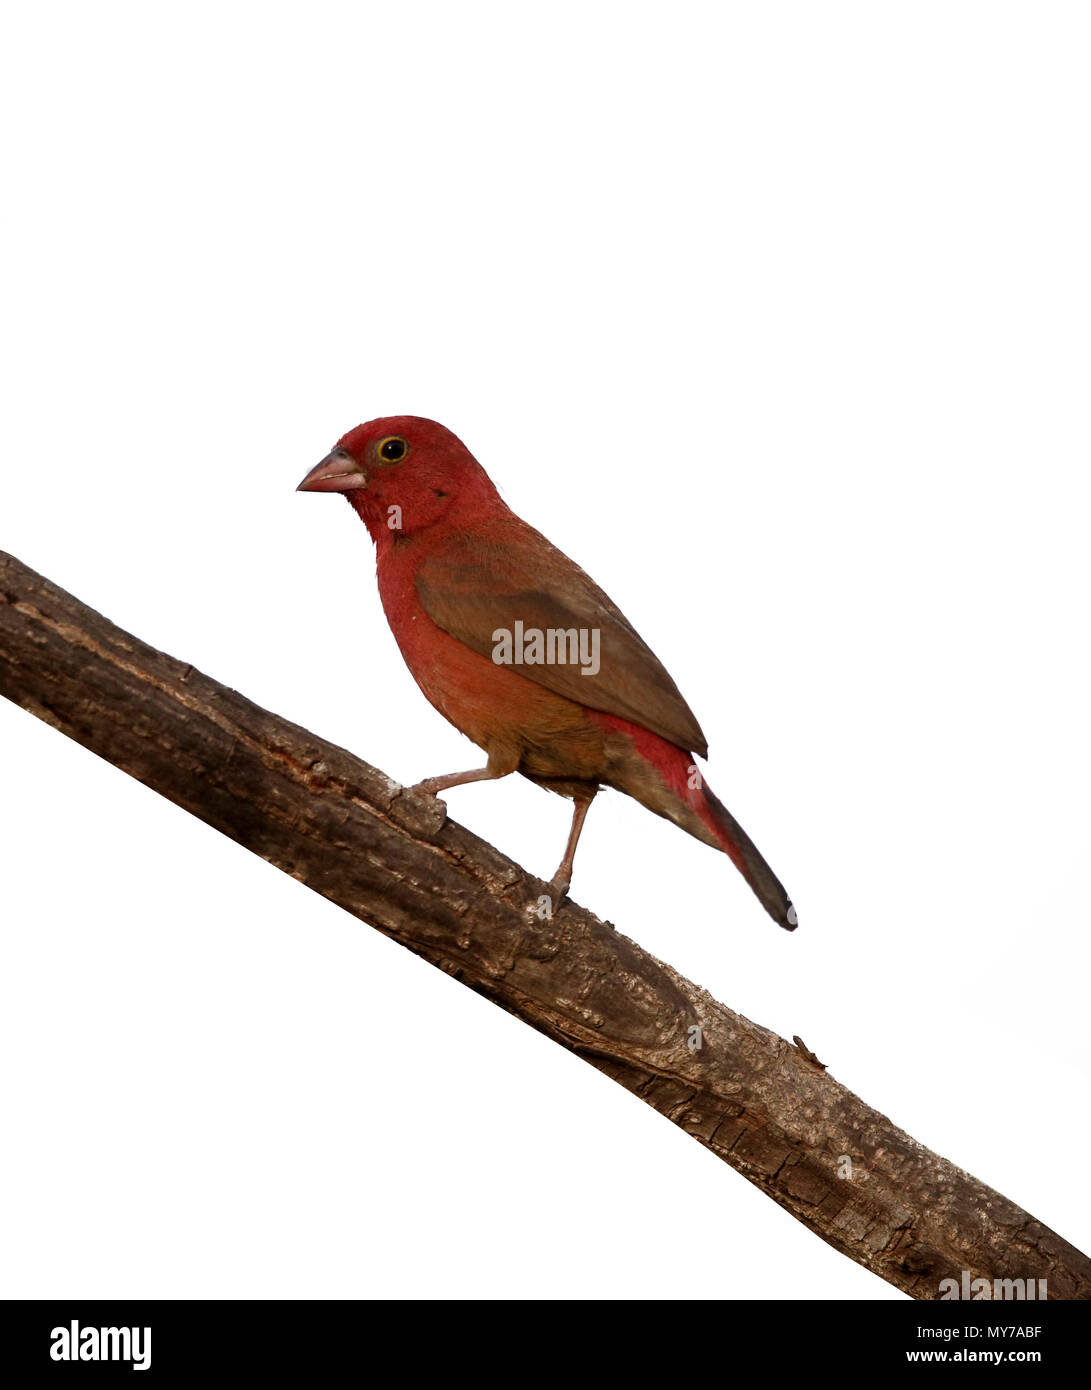 Red-billed firefinch, Lagonosticta senegala, single bird on branch, Gambia, February 2016 Stock Photo